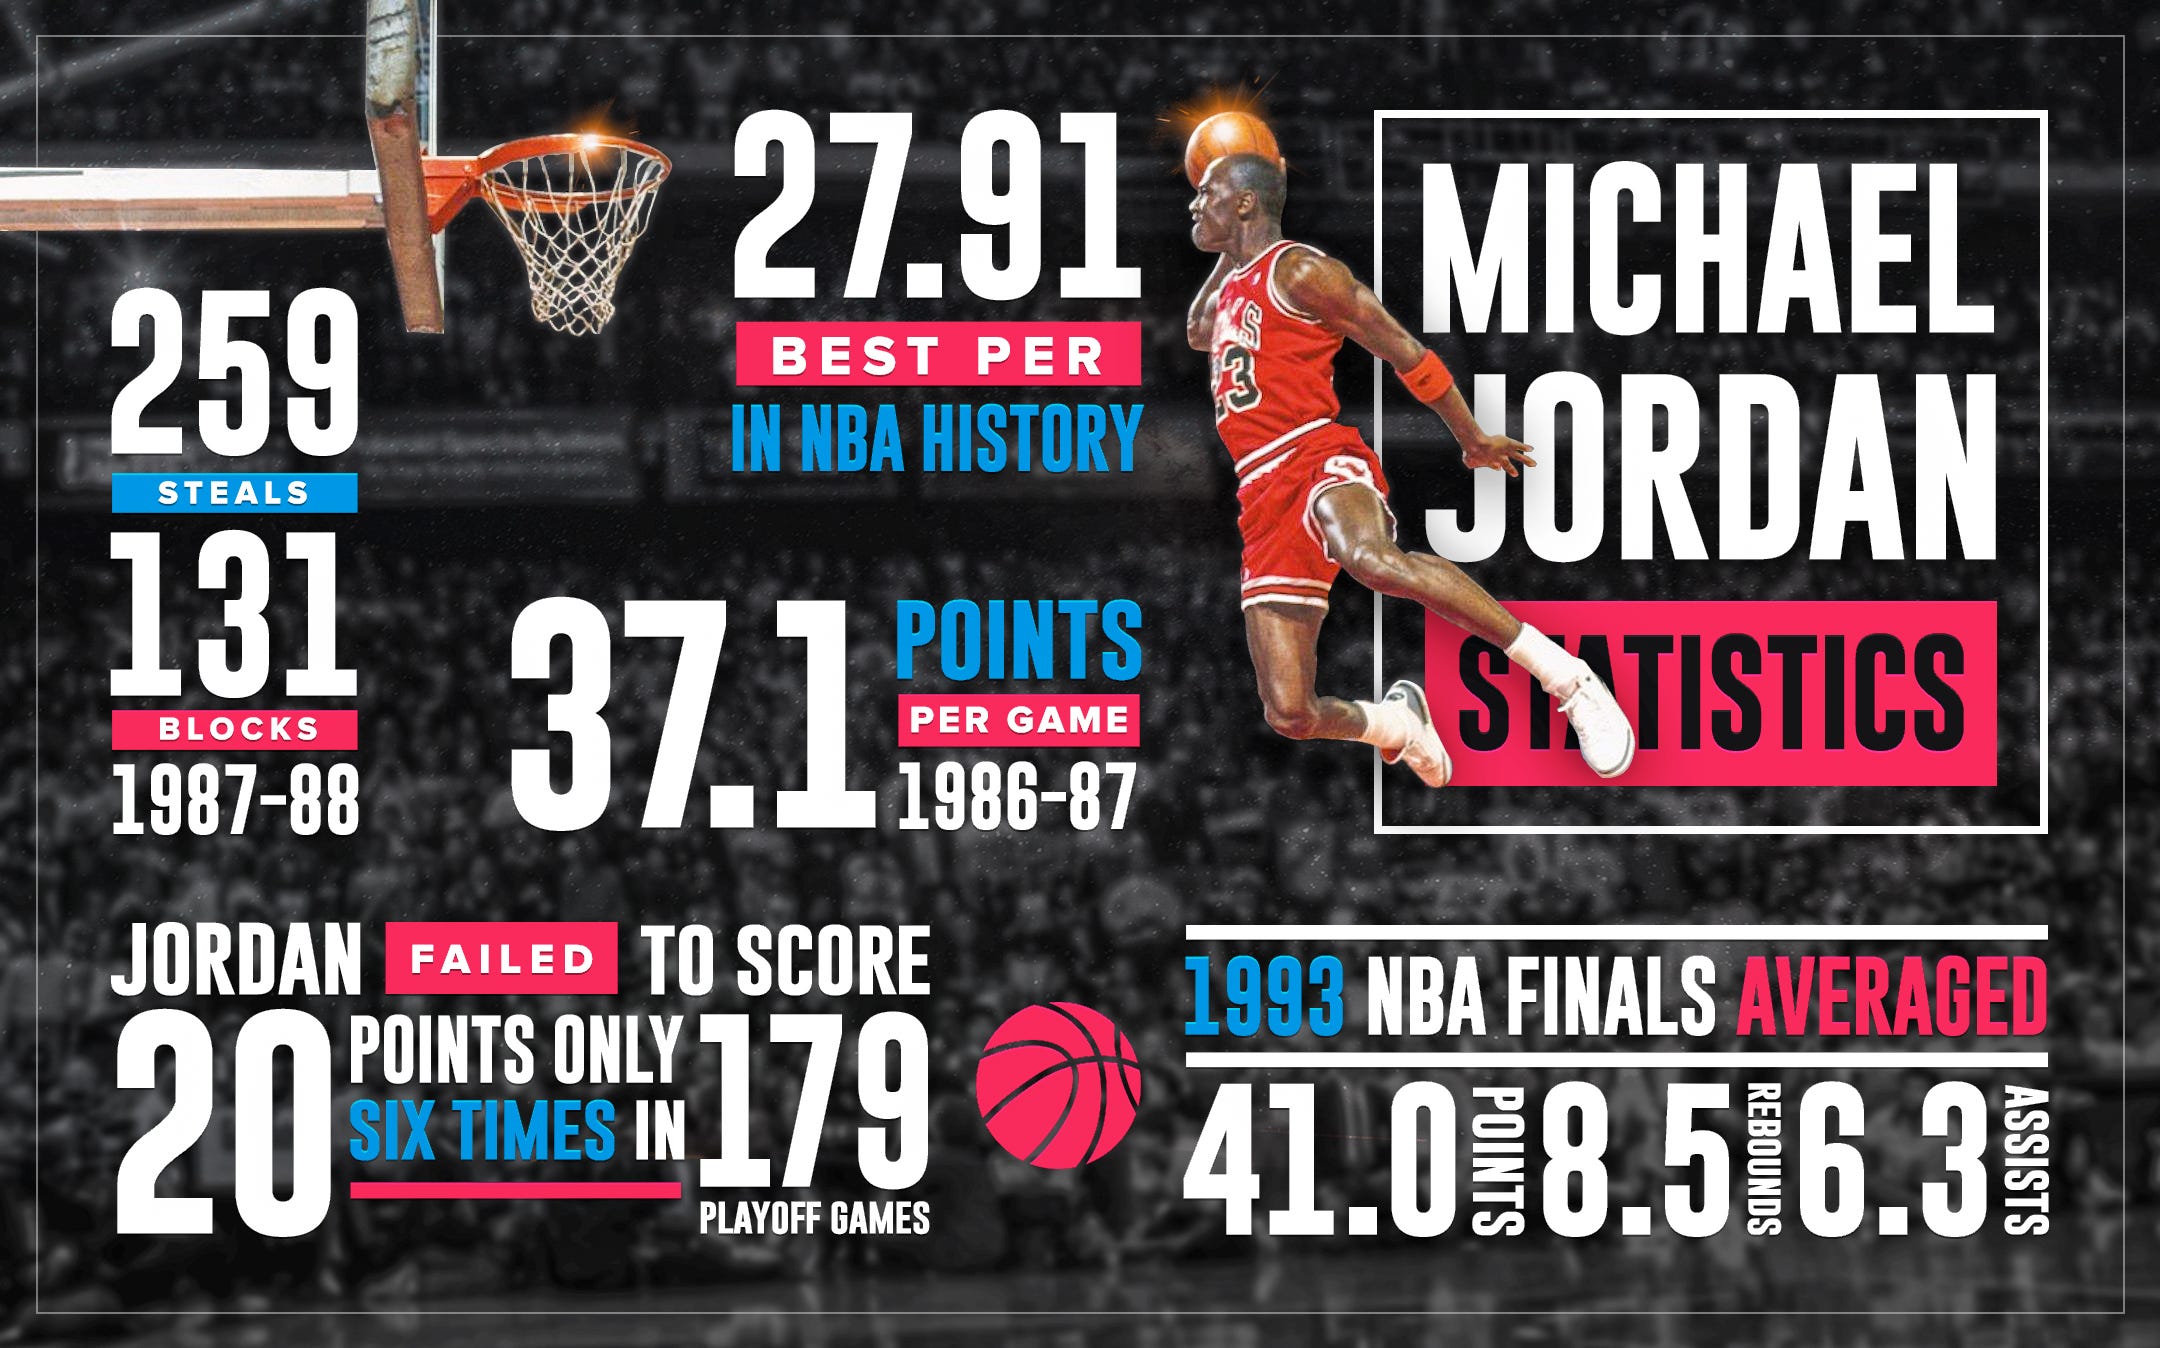 The Five Definitive Reasons Why Michael Jordan Is the Greatest | by Bernard  Moon | Medium